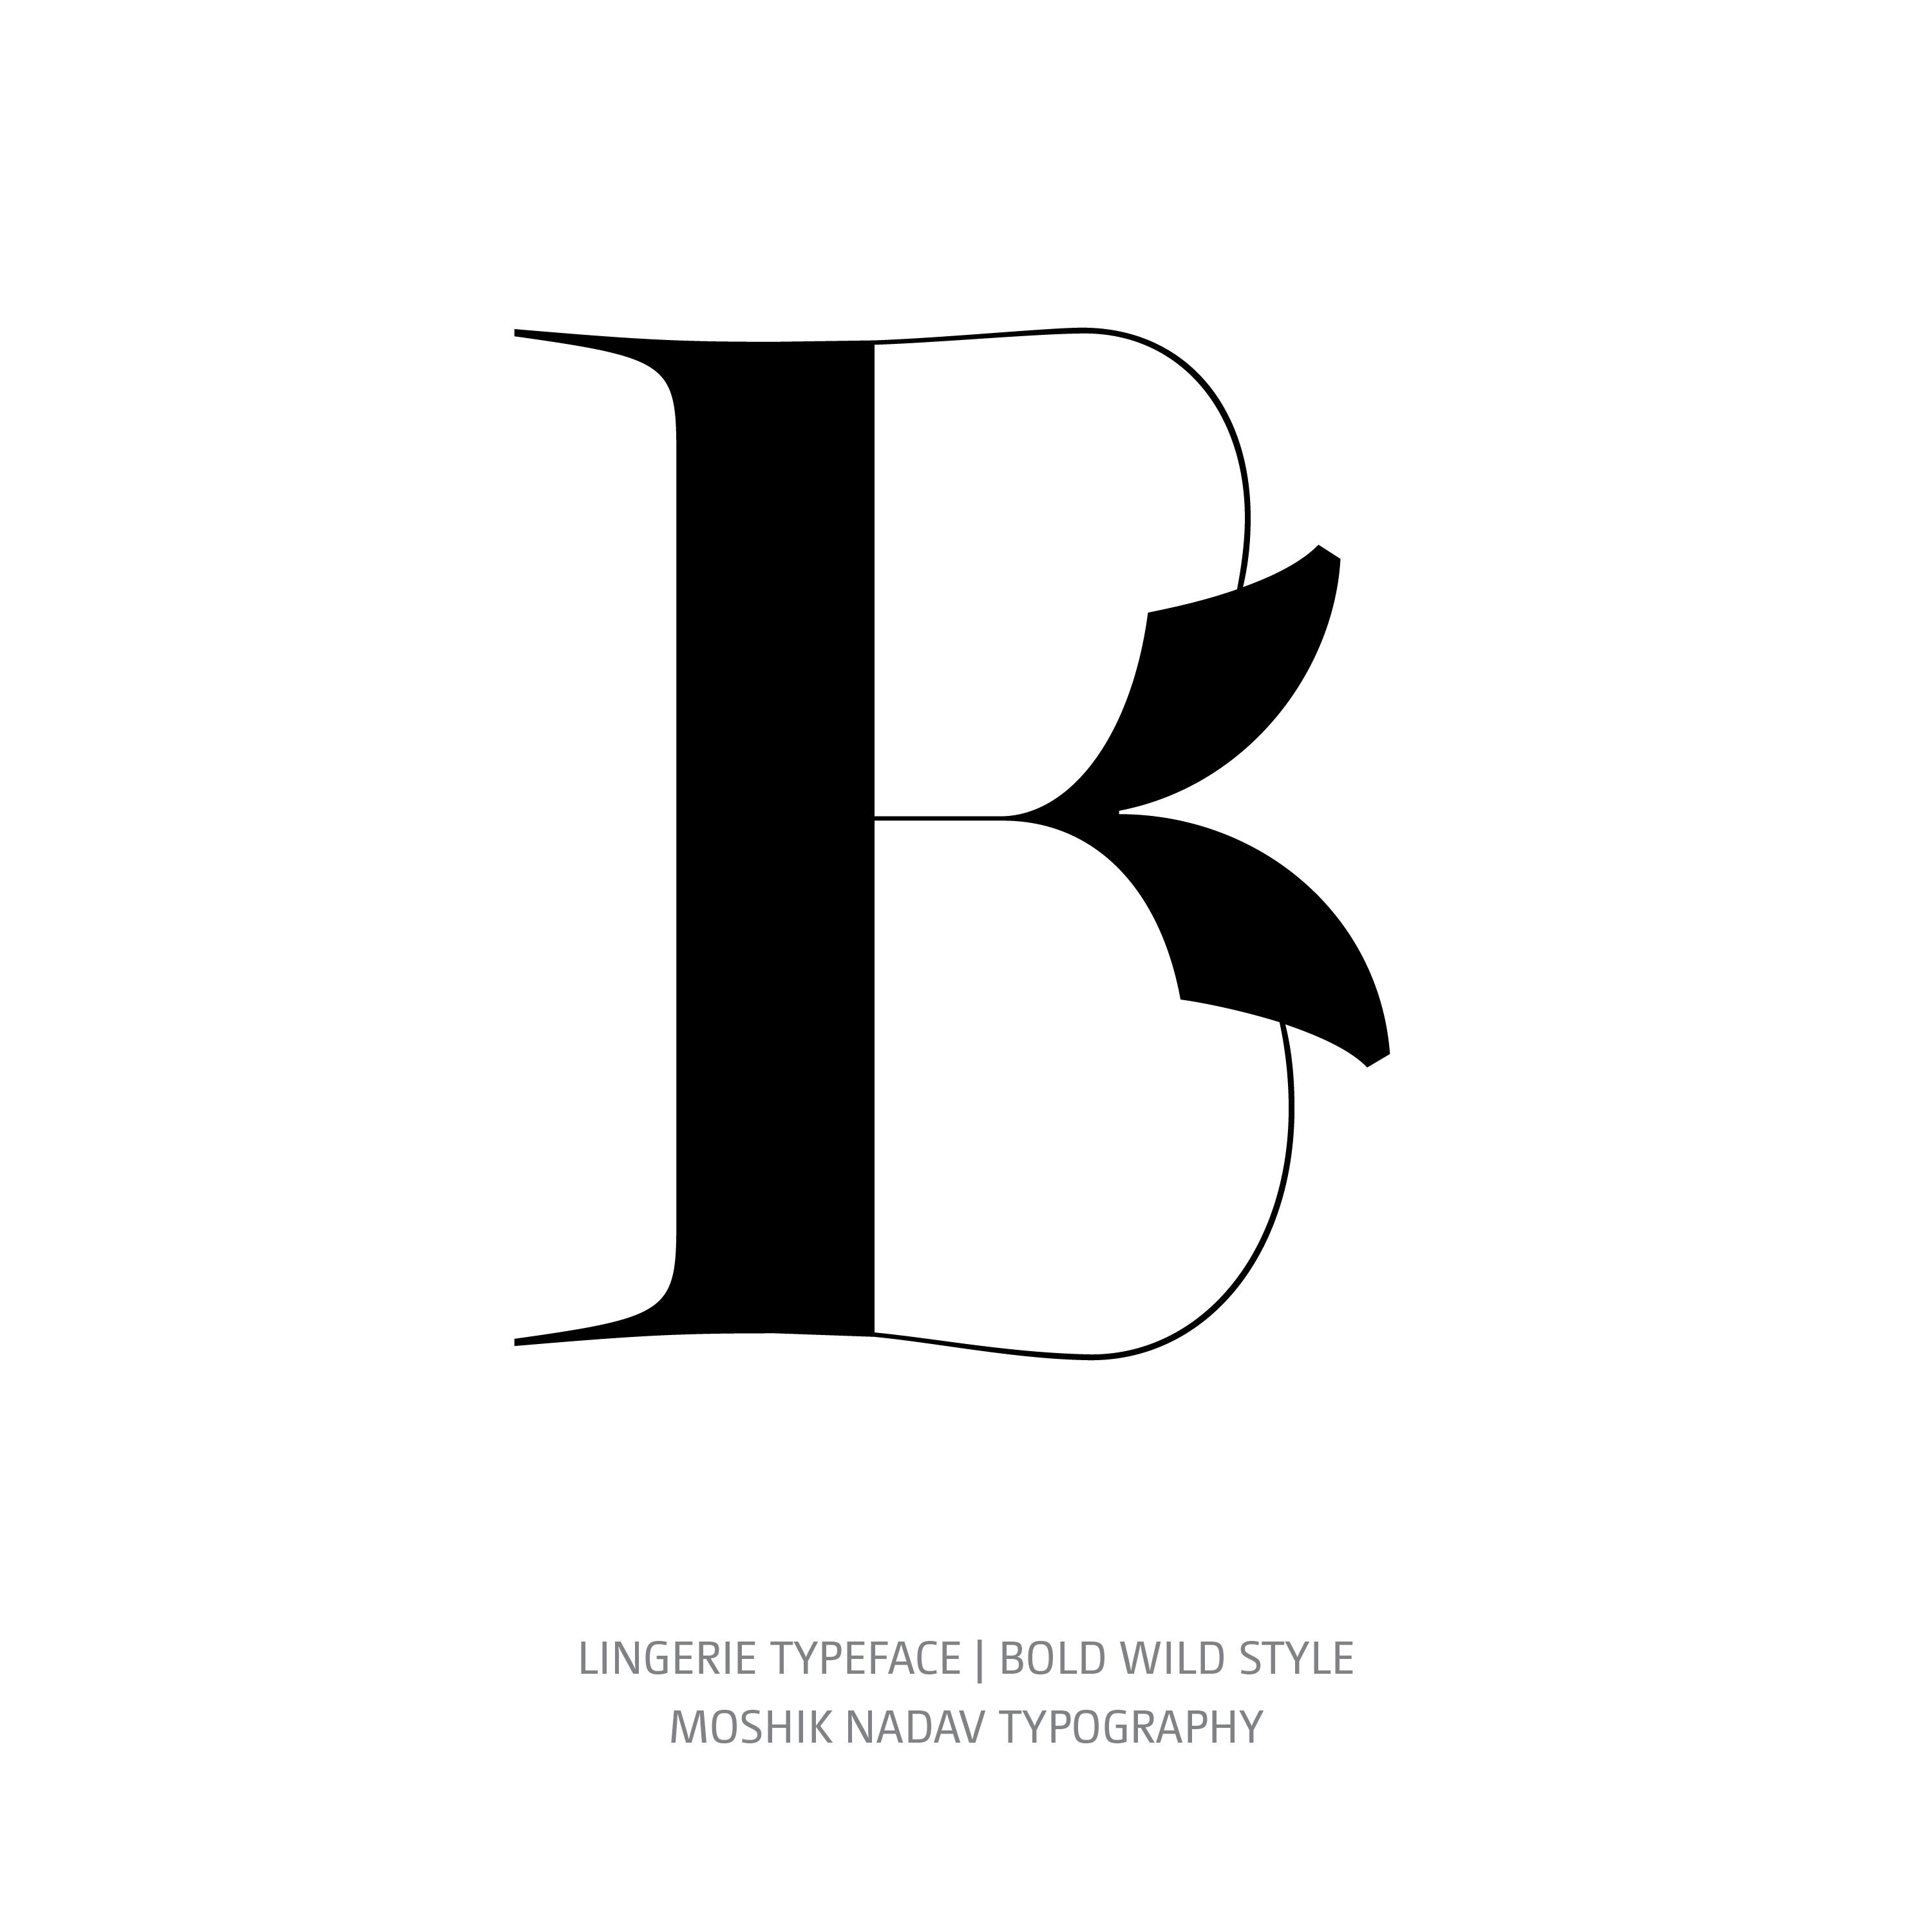 Lingerie Typeface Bold Wild B